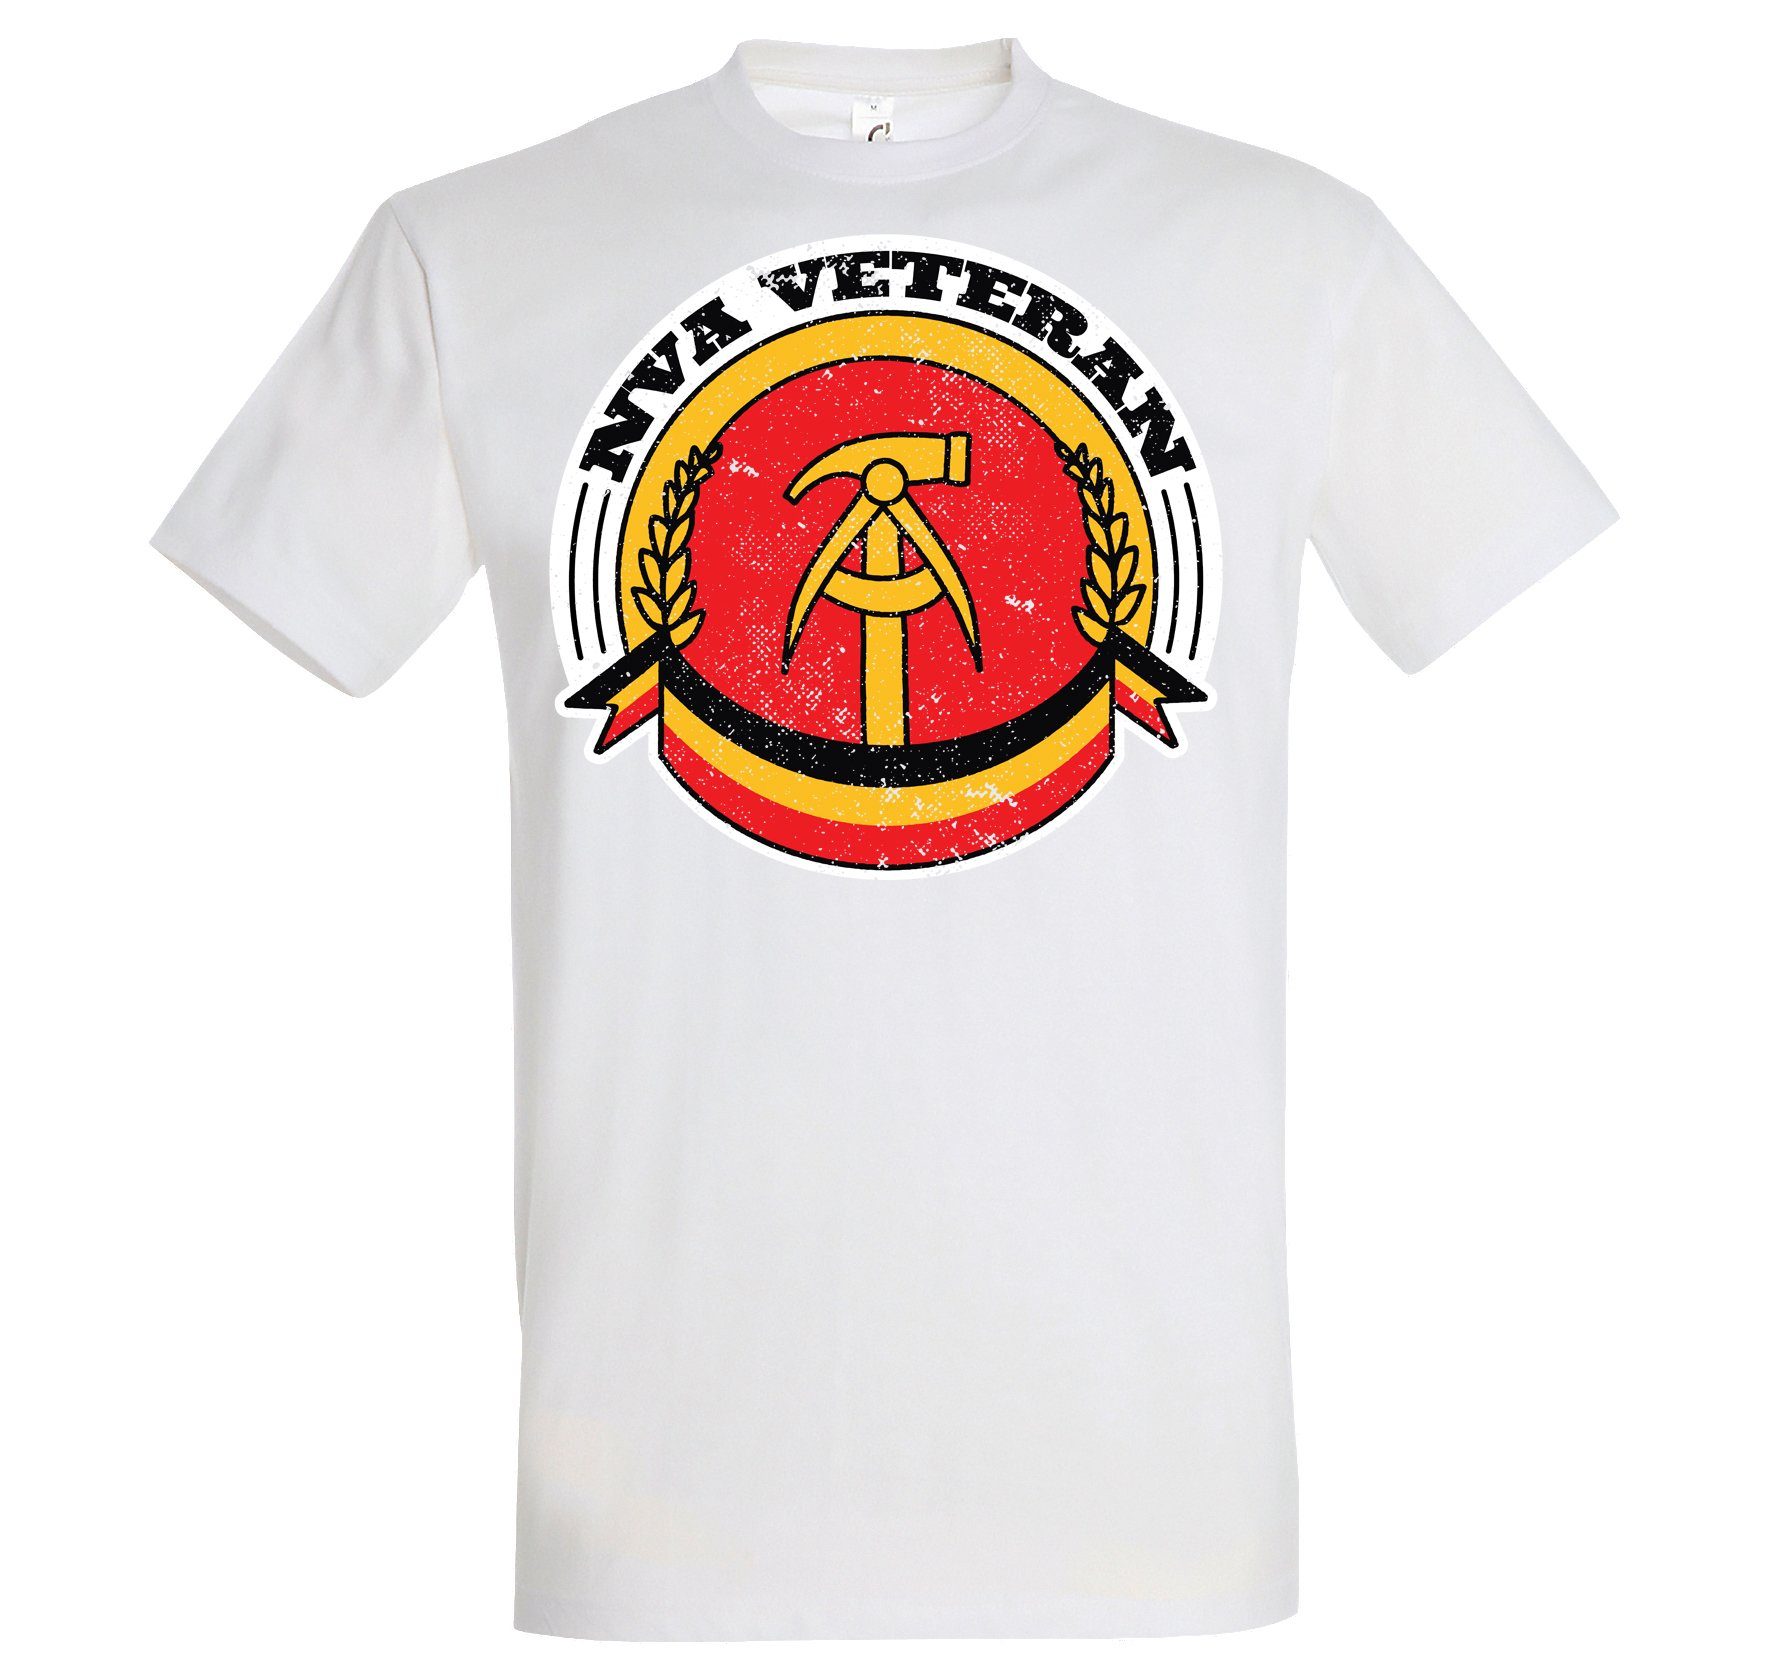 Weiß Frontprint trendigem Designz mit Herren T-Shirt Shirt Youth Veteran NVA